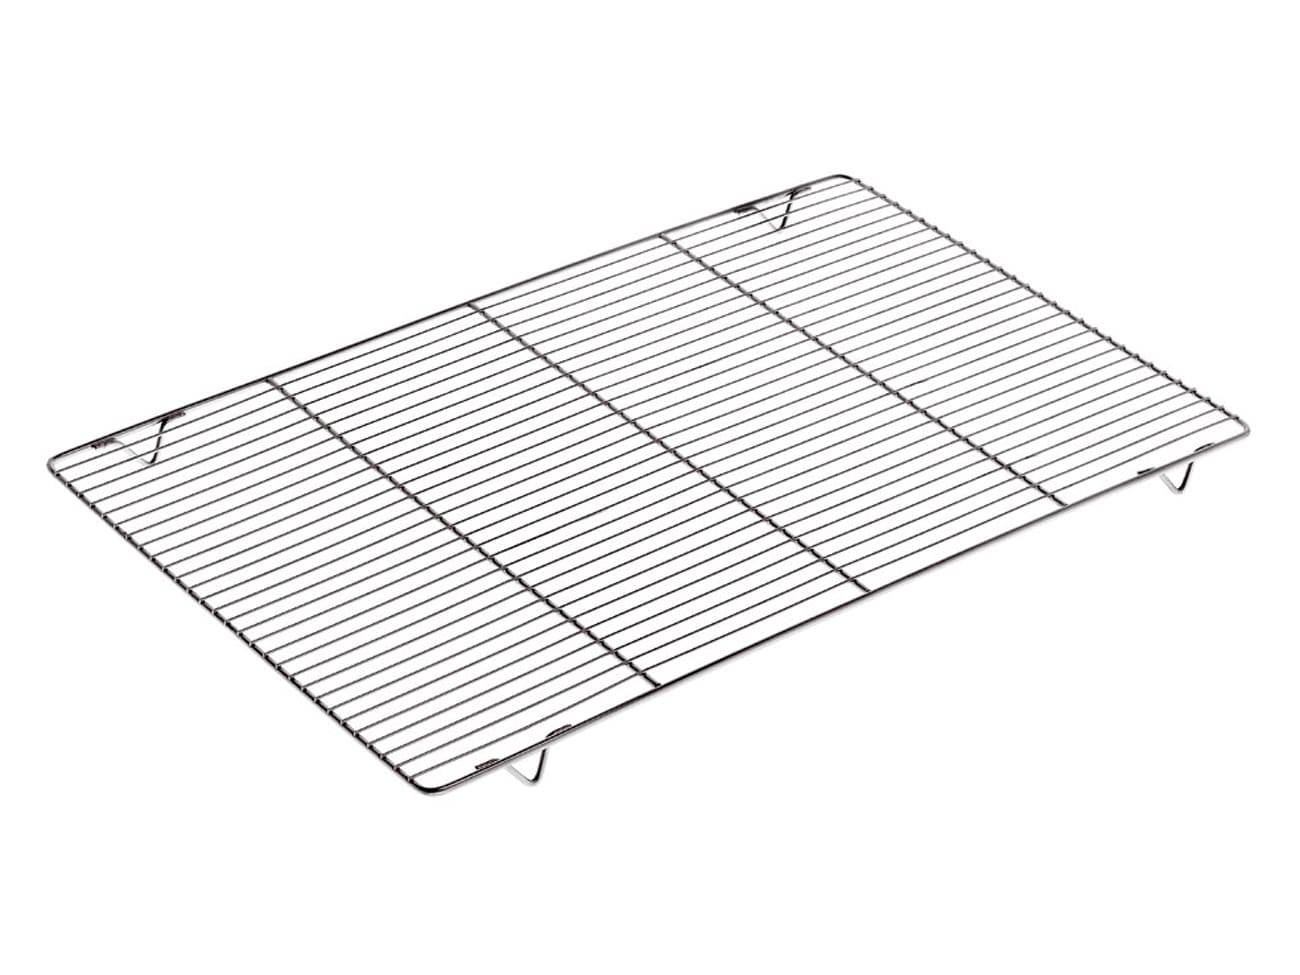 Jual Cooling Wire Stainless Rak Grid Display - 40 x 60 cm